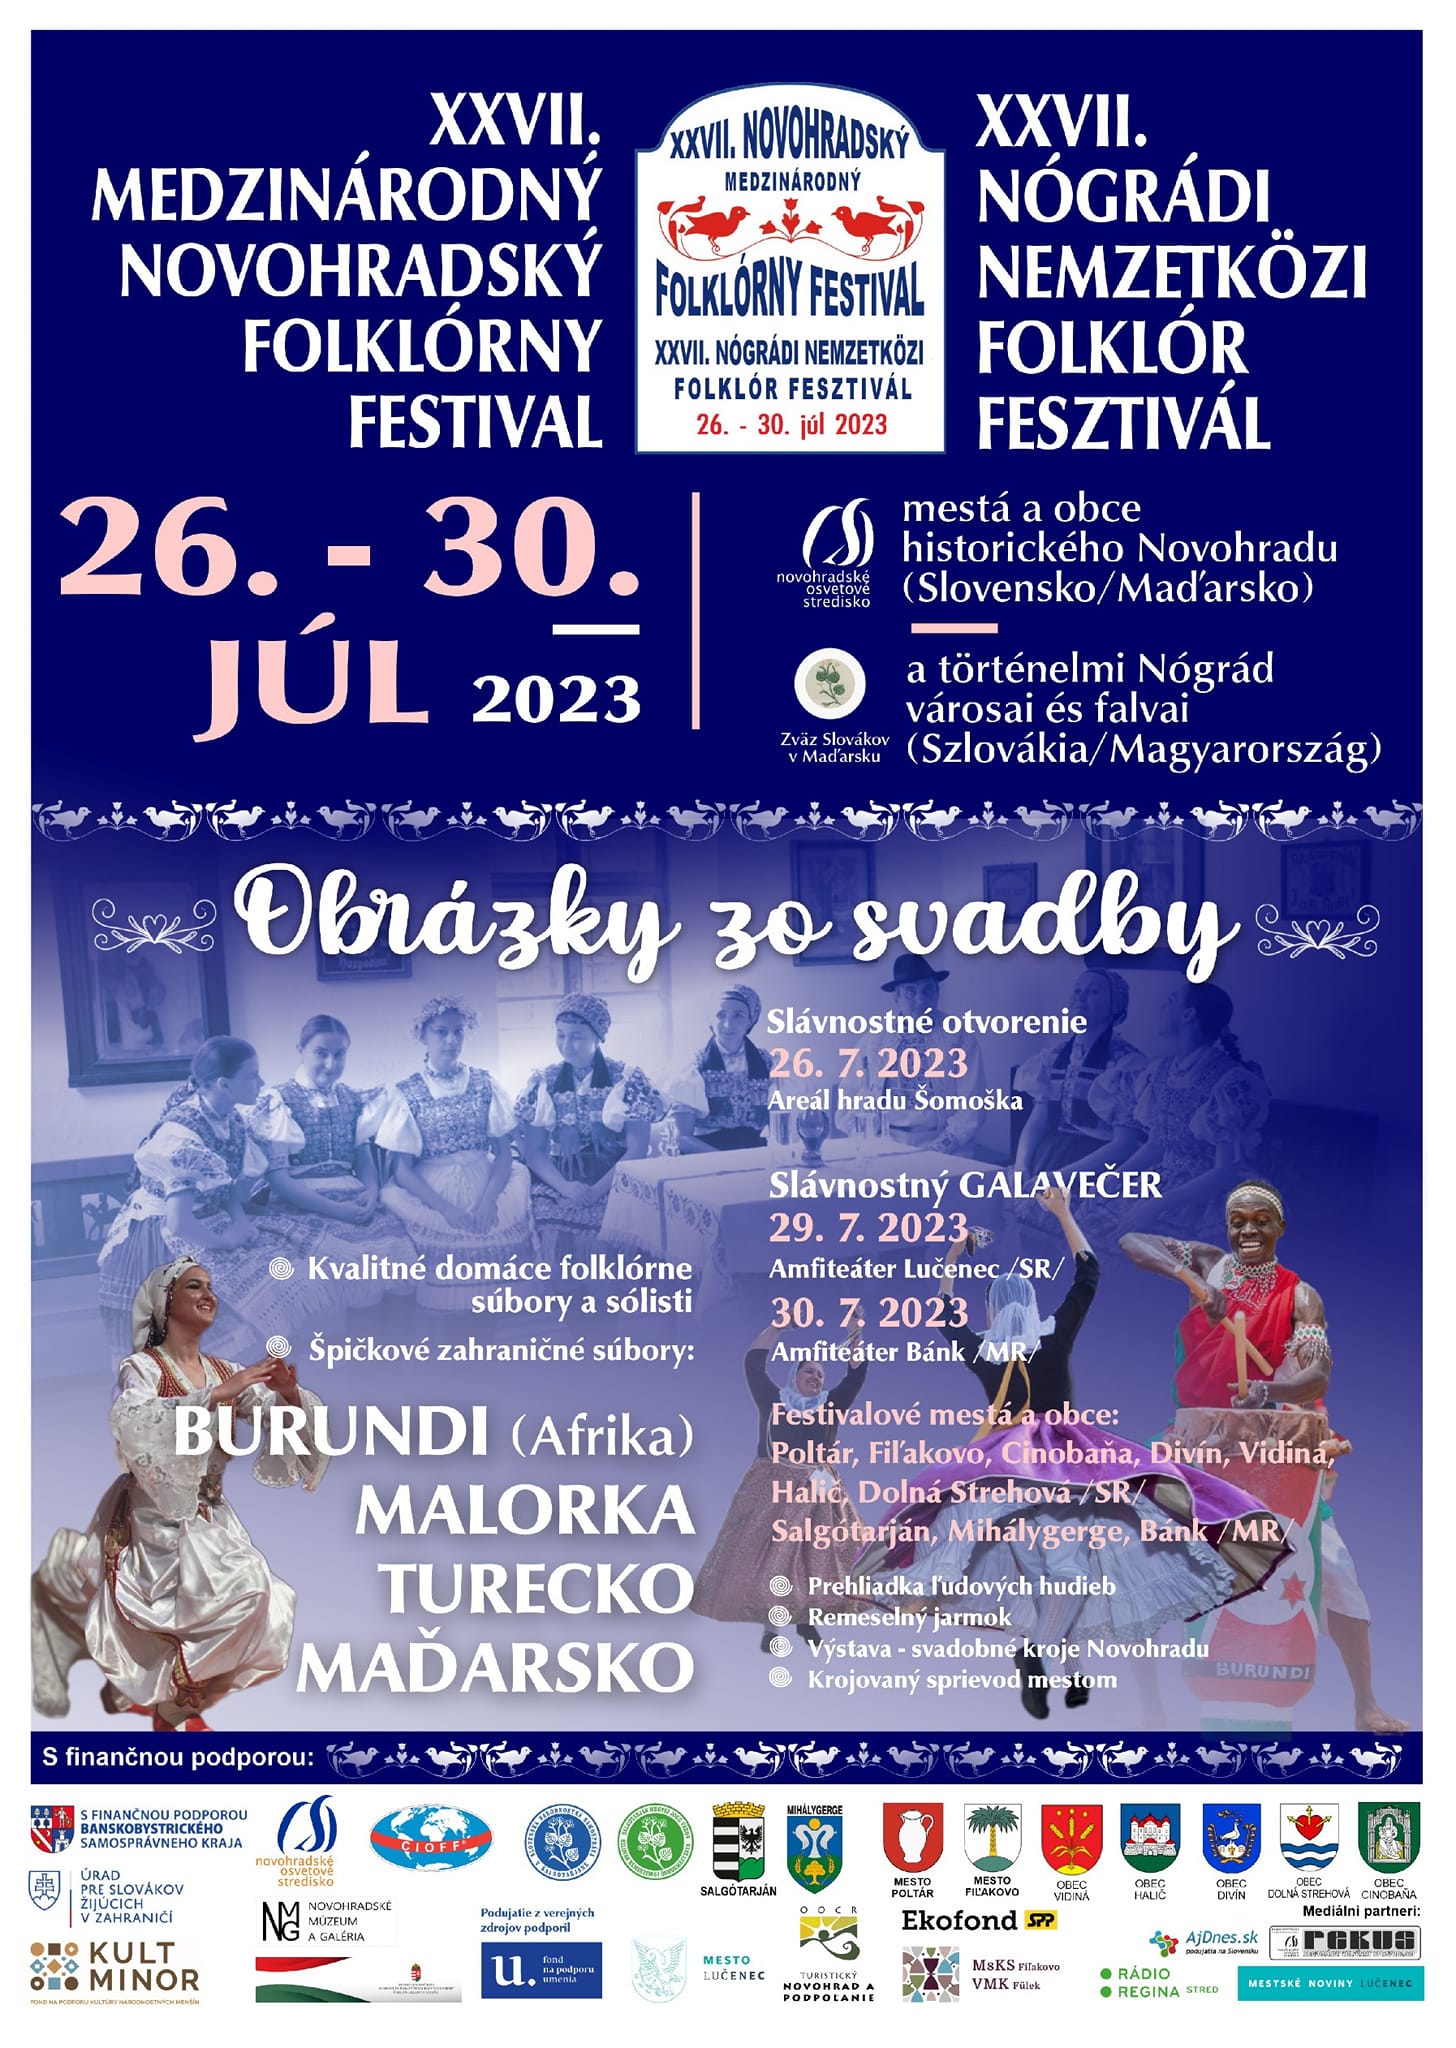 Medzinrodn Novohradsk folklrny festival 2023 Luenec - 27. ronk